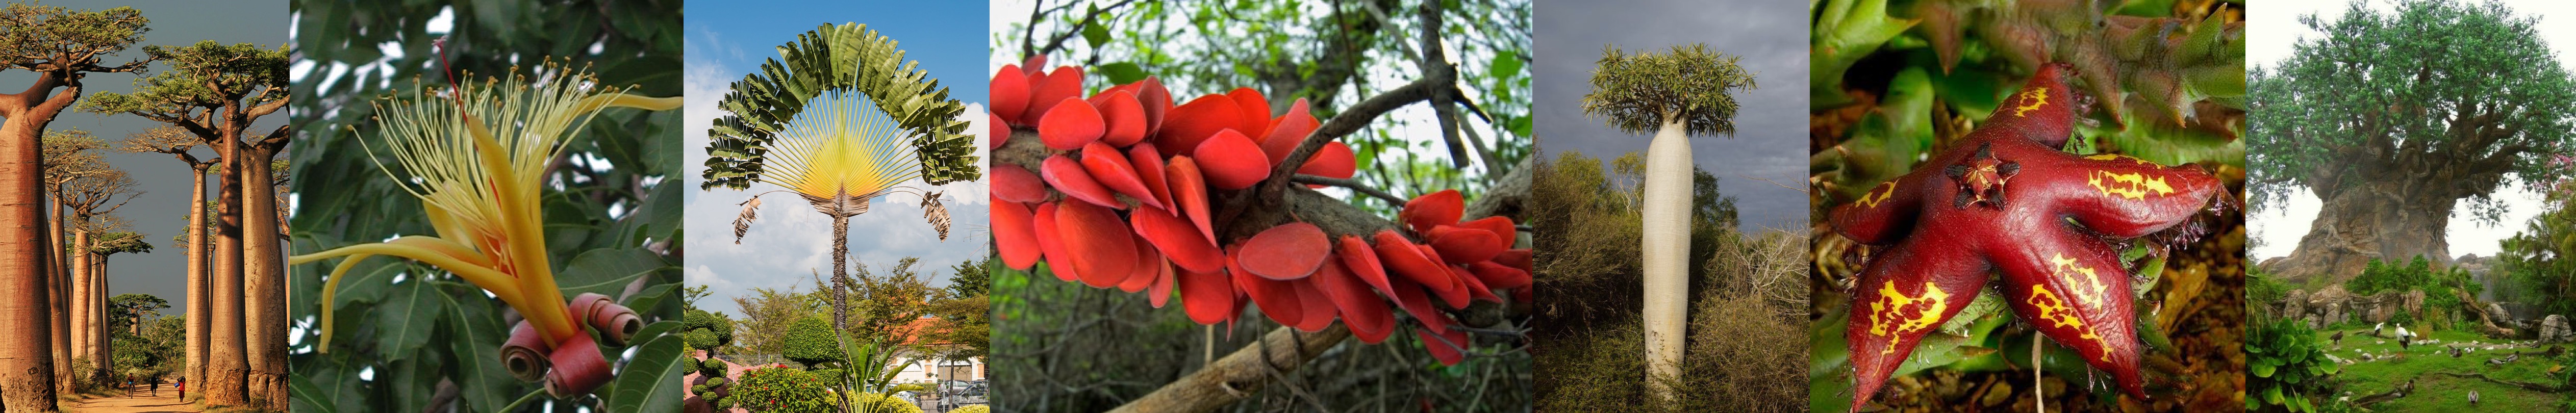 tsara wiki flora madagascar Madagaskar  plantenwereld